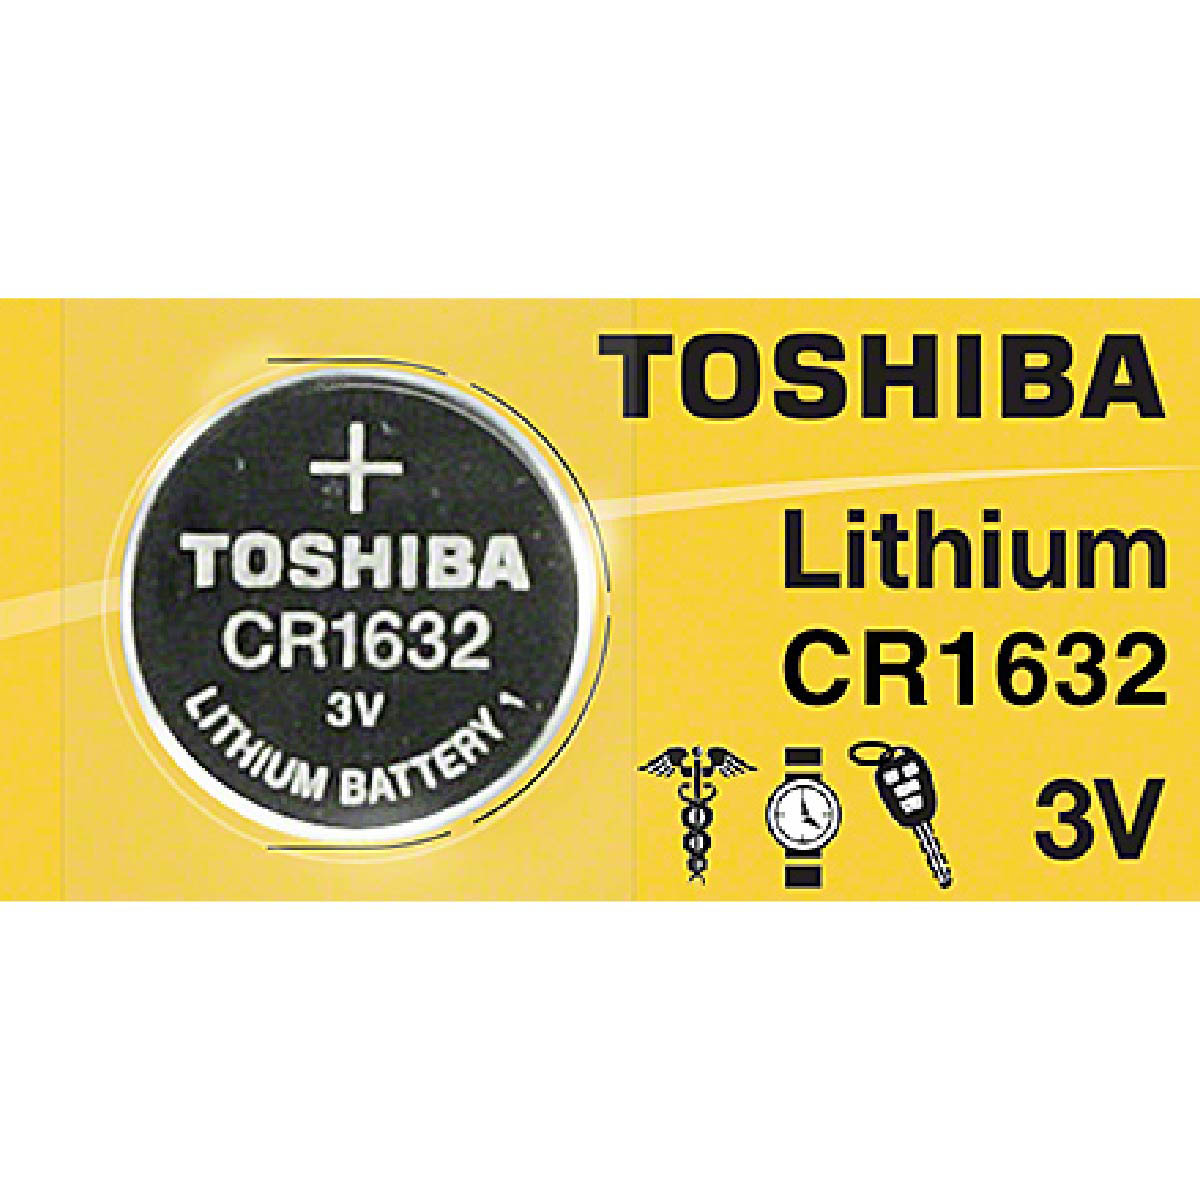 Toshiba CR1632 Battery 3V Lithium Coin Cell (1PC)